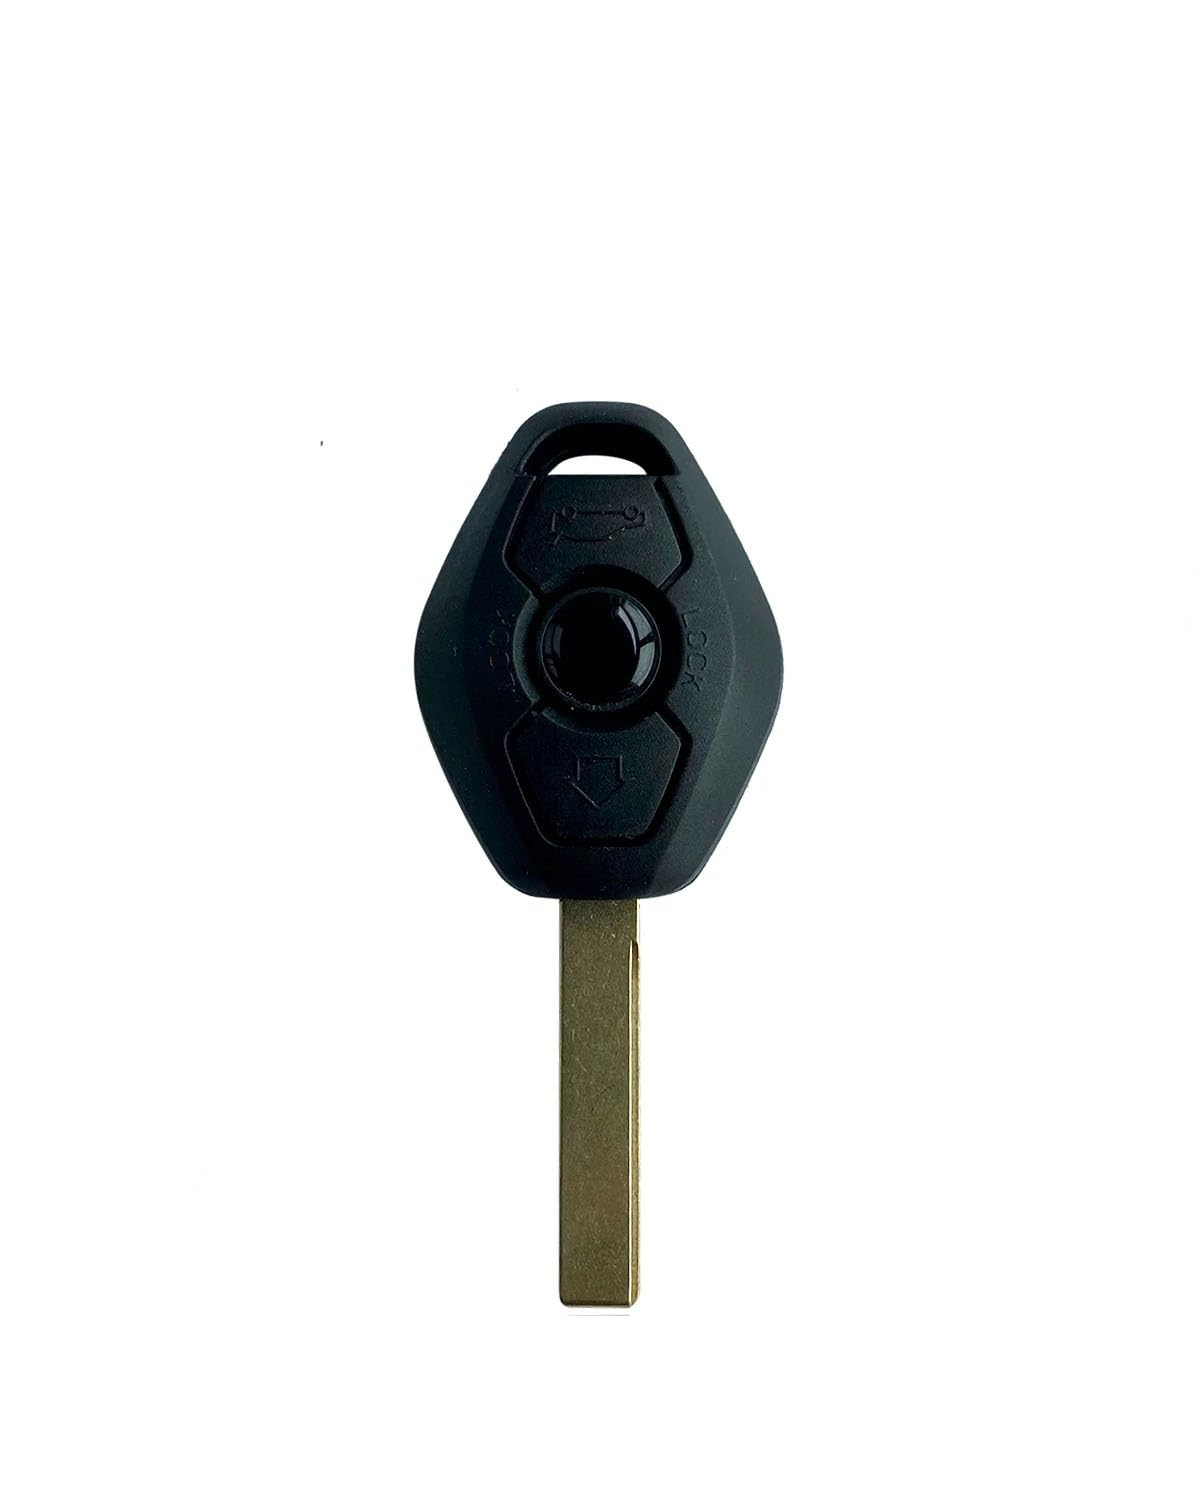 Funkschlüsseletui Ersatz-Fernbedienung Für Autoschlüsselgehäuse, Für E38 E39 E46, Cas-System, Funkschlüsselgehäuse, Schlüsselloser Schlüsselanhänger Autoschlüsseletui von MXDDWLKJ